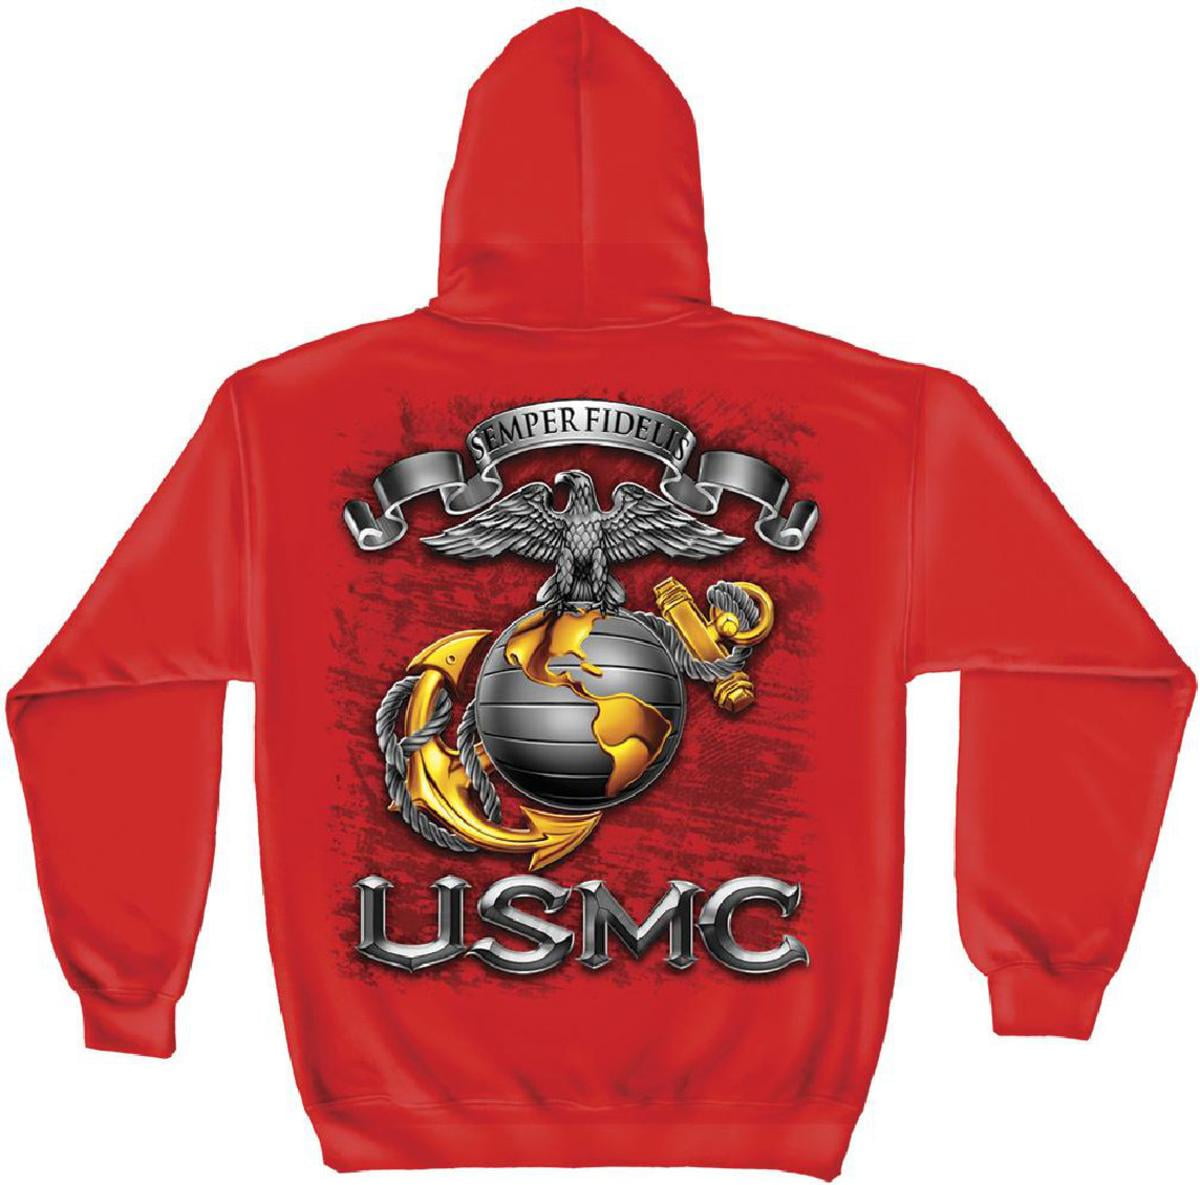 Ice-Long Out X Operation Iraqi Freedom OIF Marine Corps EGA Veteran Mens Fashion Sleeveless Zip-up Hoodie Black with Pocket